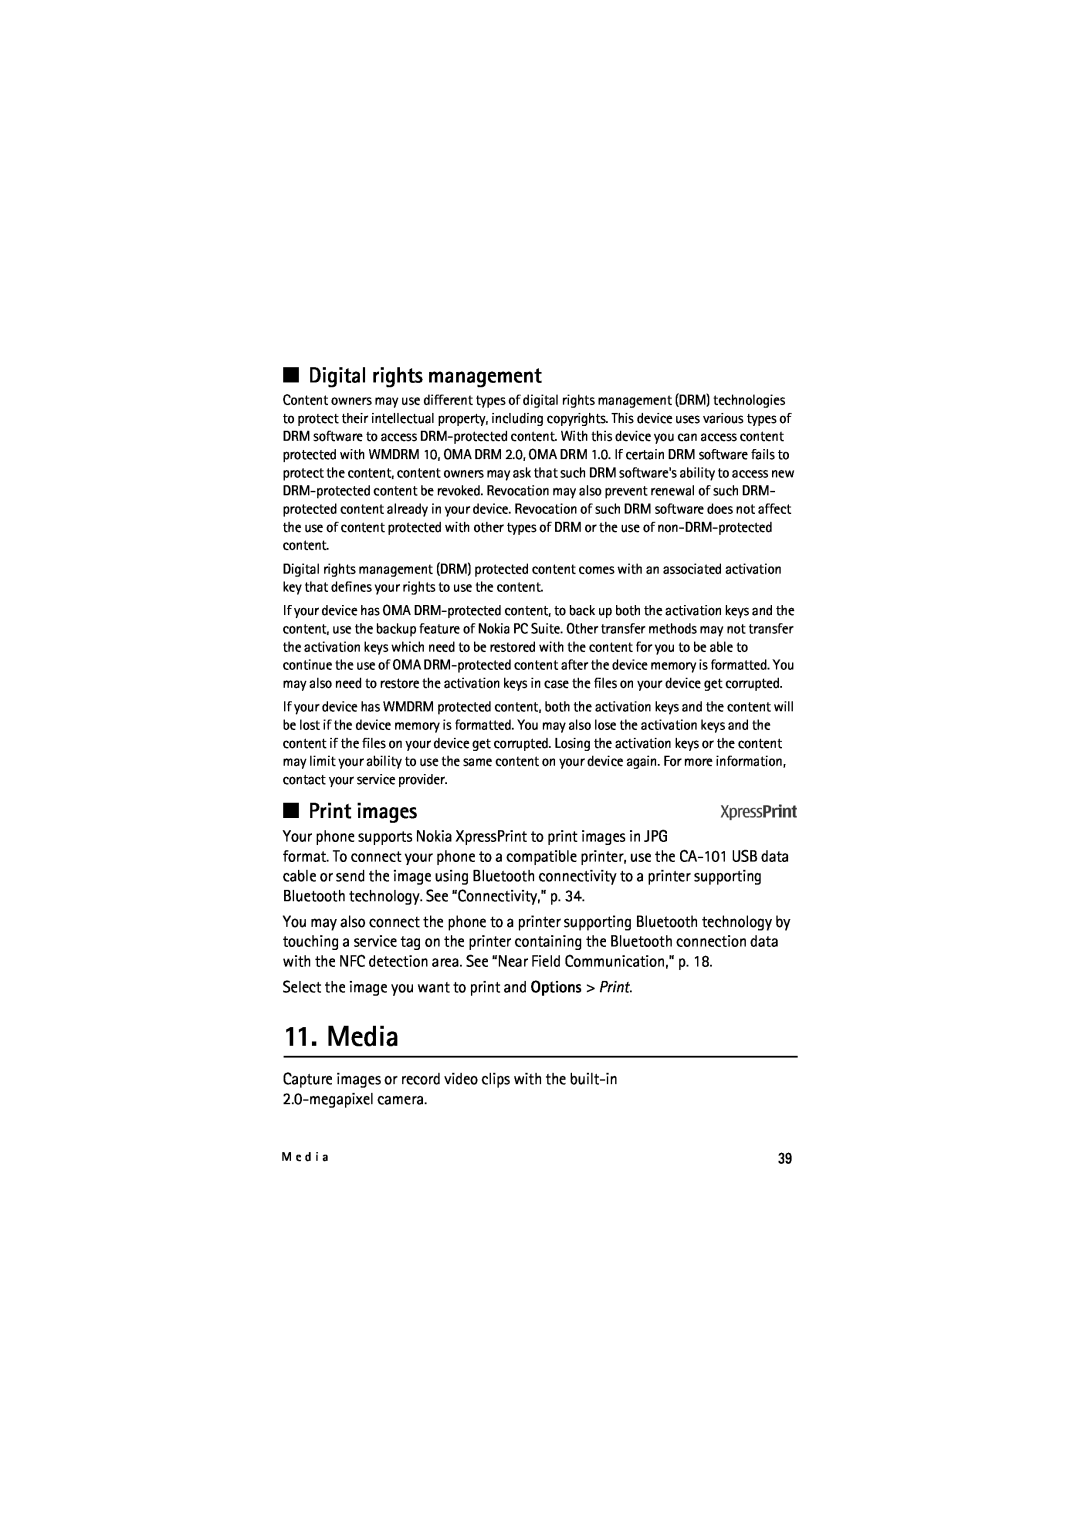 Nokia 6212 manual Media, Digital rights management, Print images 